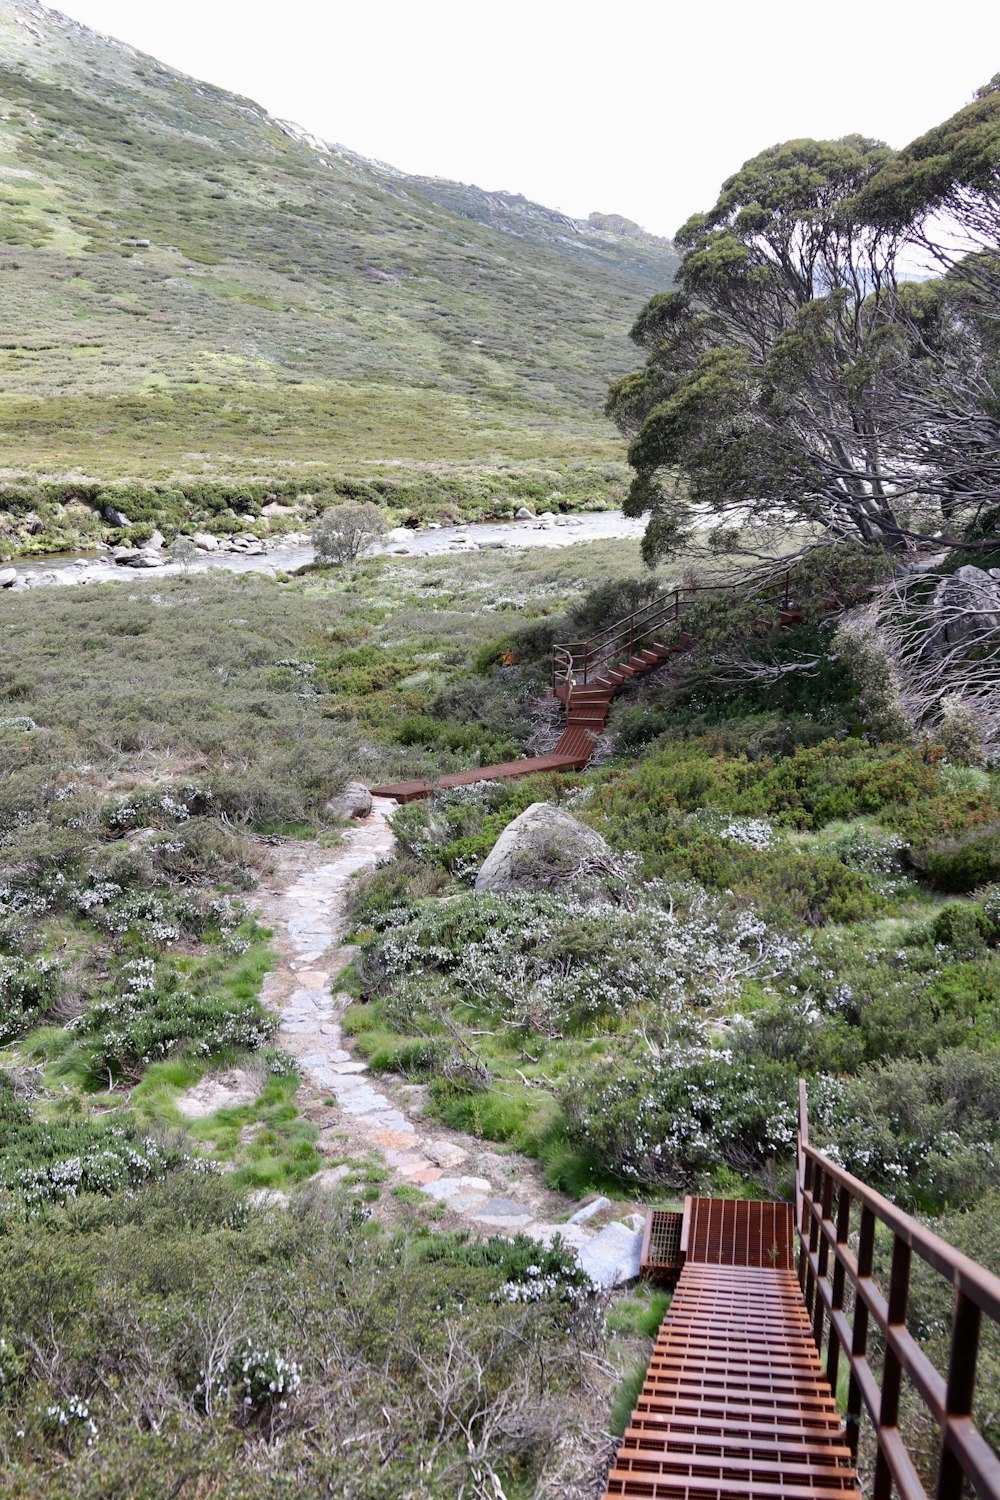 a wooden path going through a lush green hillside